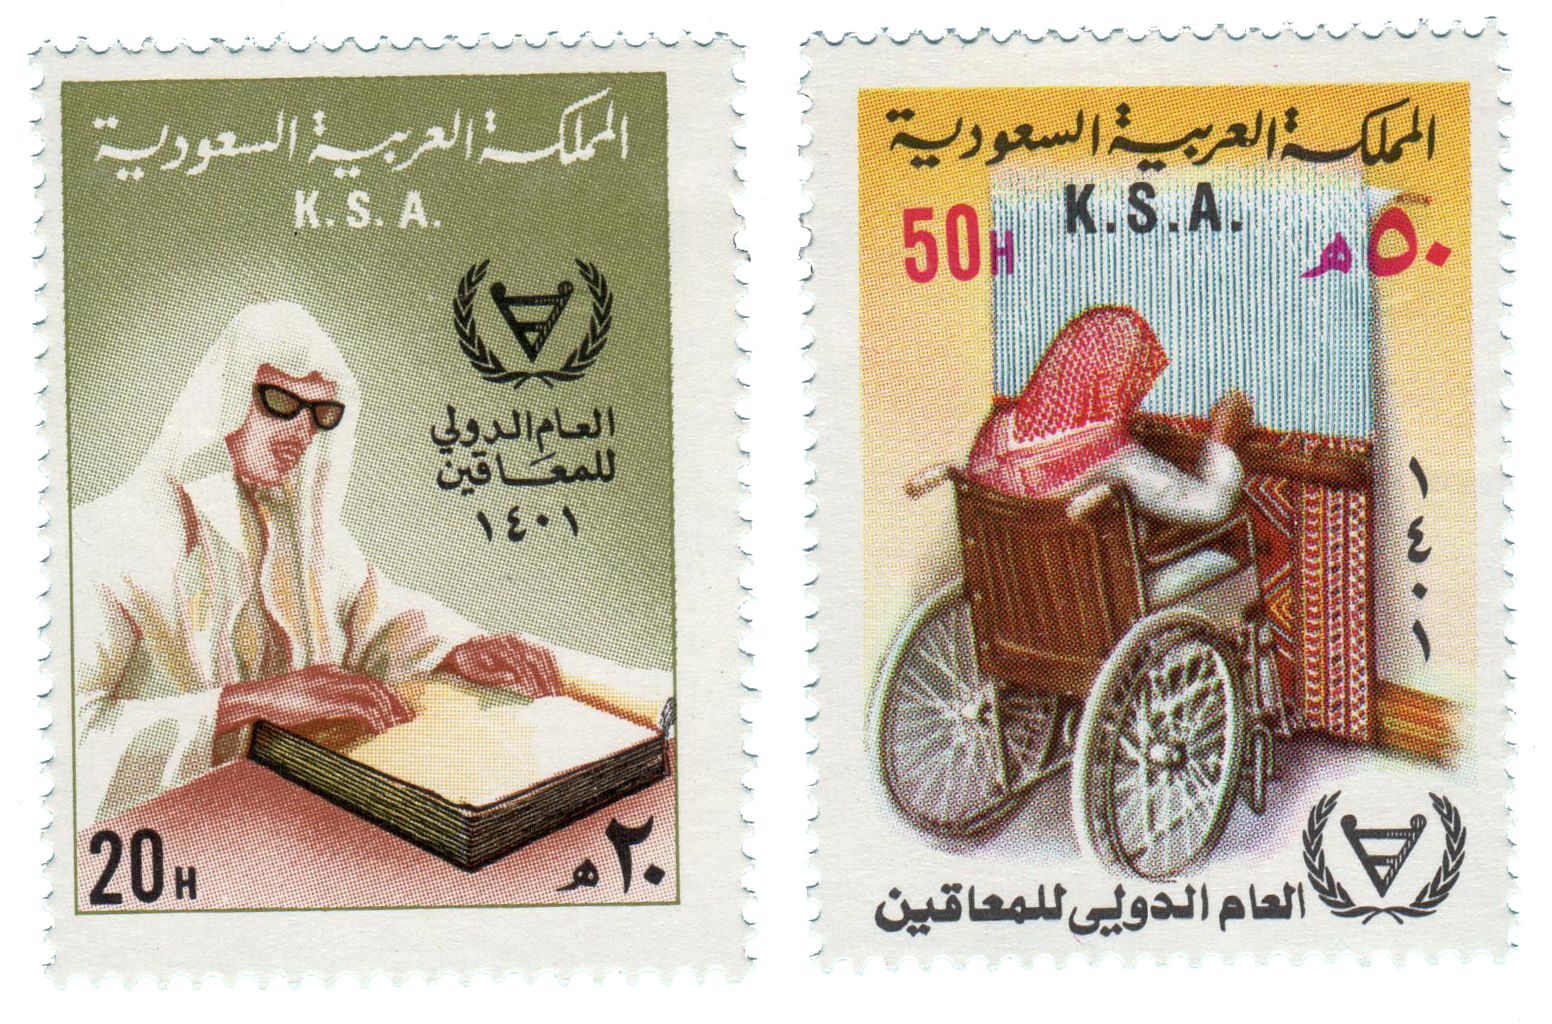 1981 Saudi Arabia Braille stamps